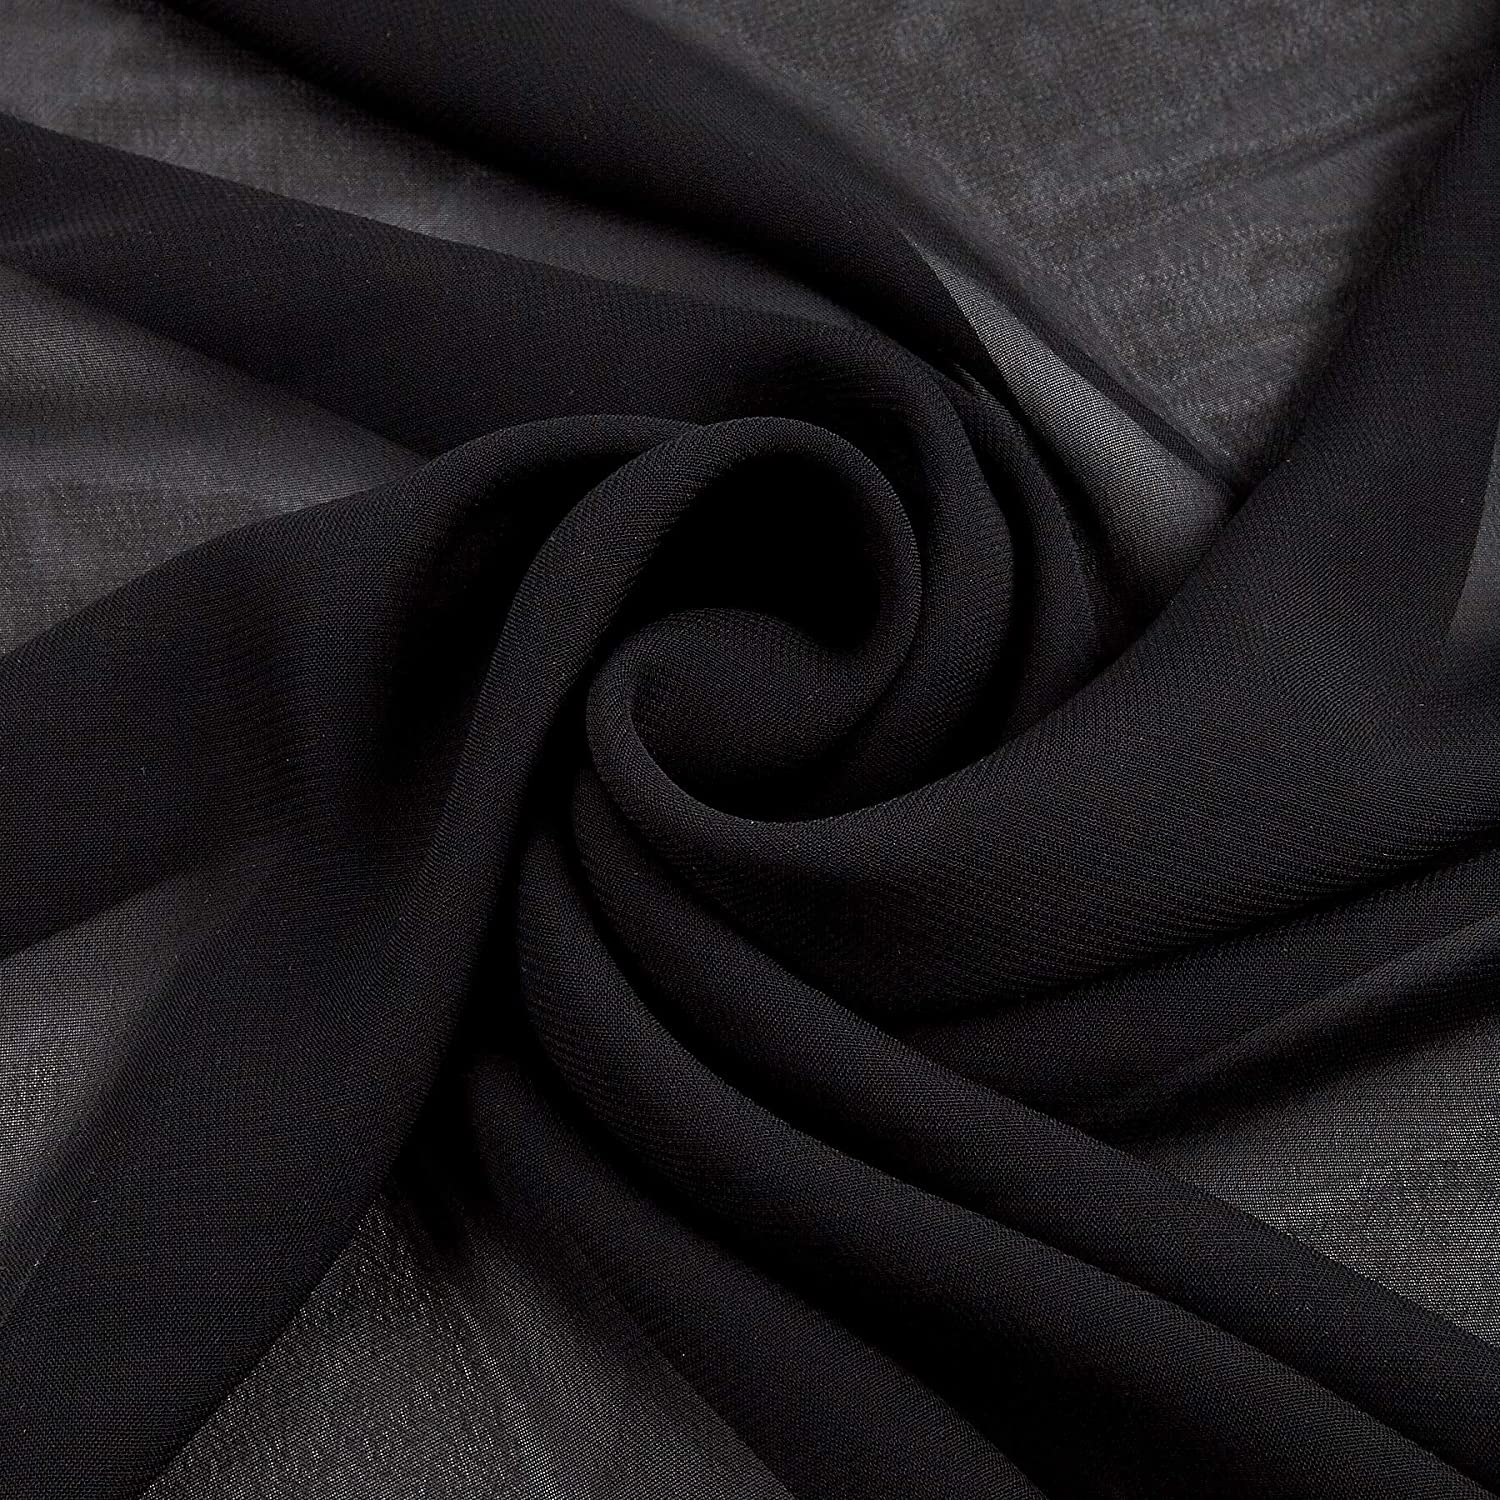 58" Black Chiffon Fabric By The Yard - Polyester